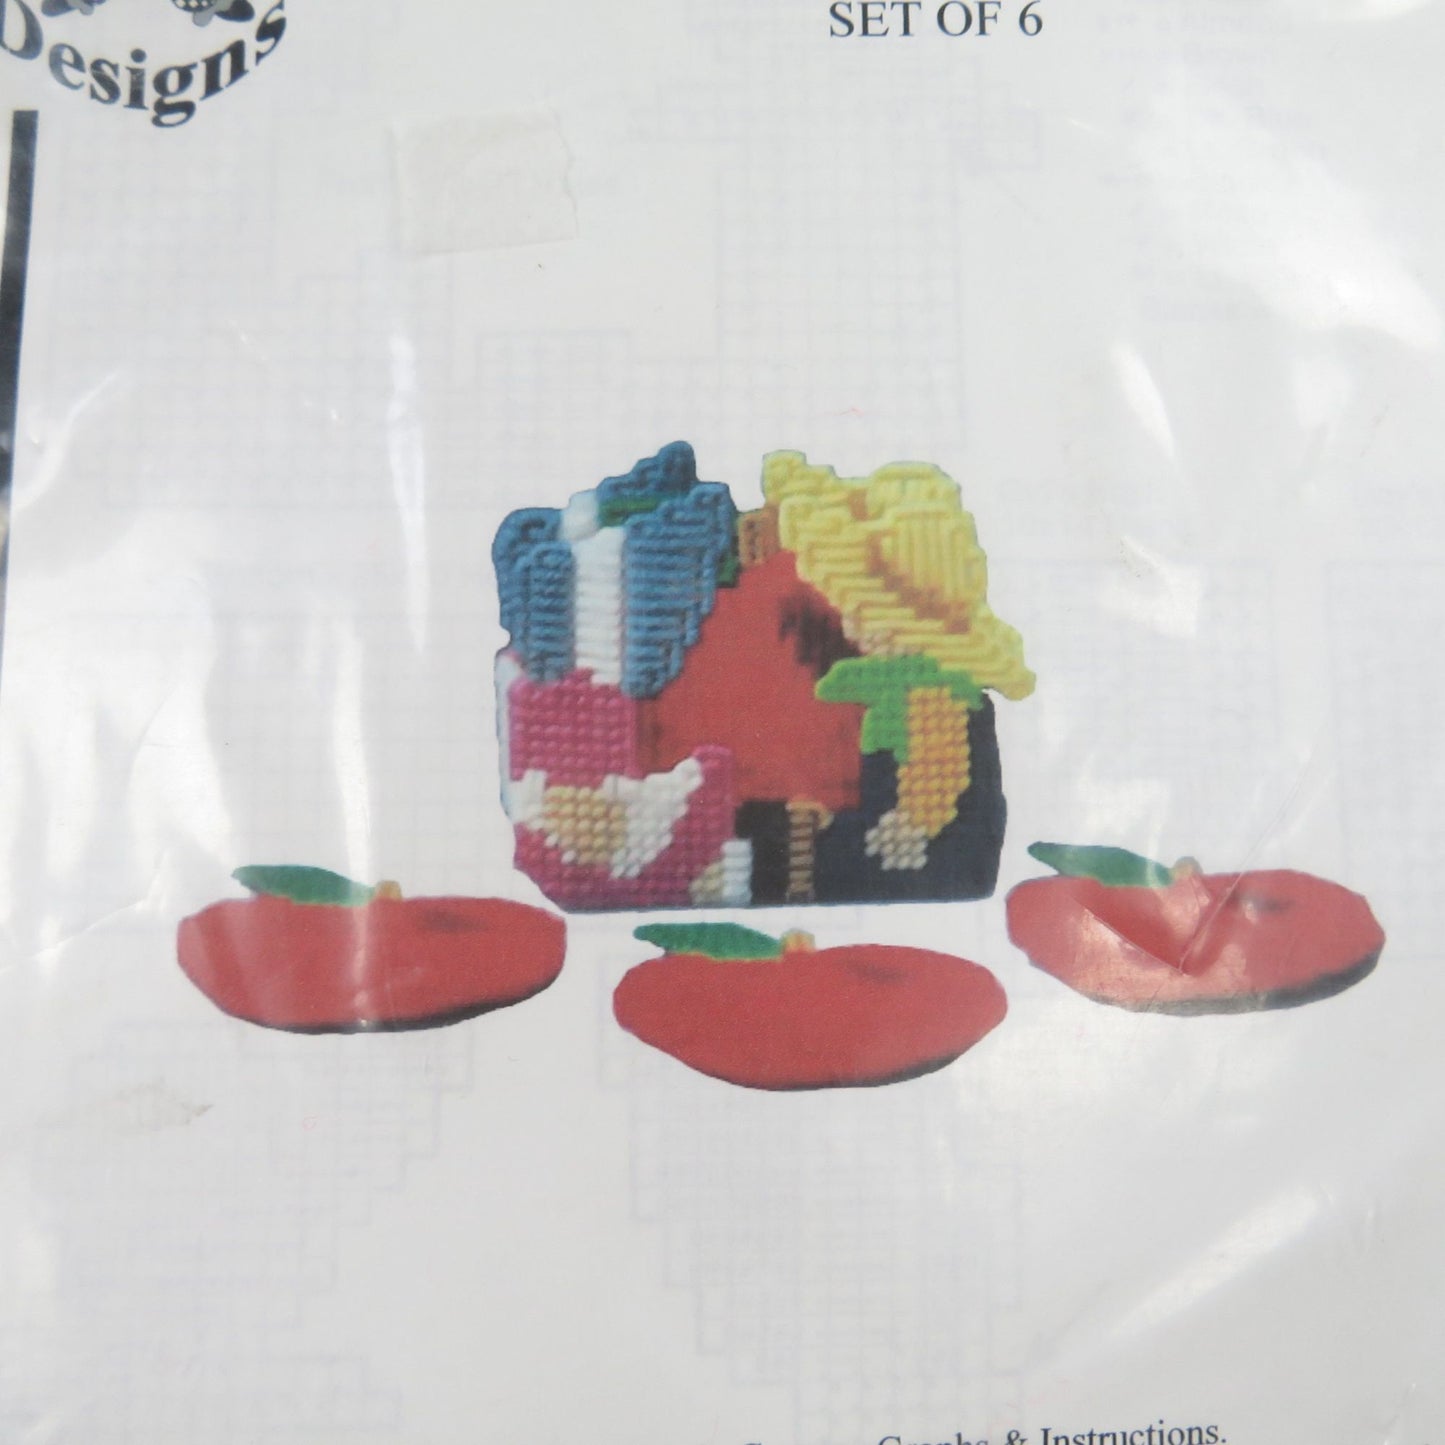 Apple Coasters and Sunbonnet Holder Plastic Canvas Kit LuvLee Designs Needlepoint Kit